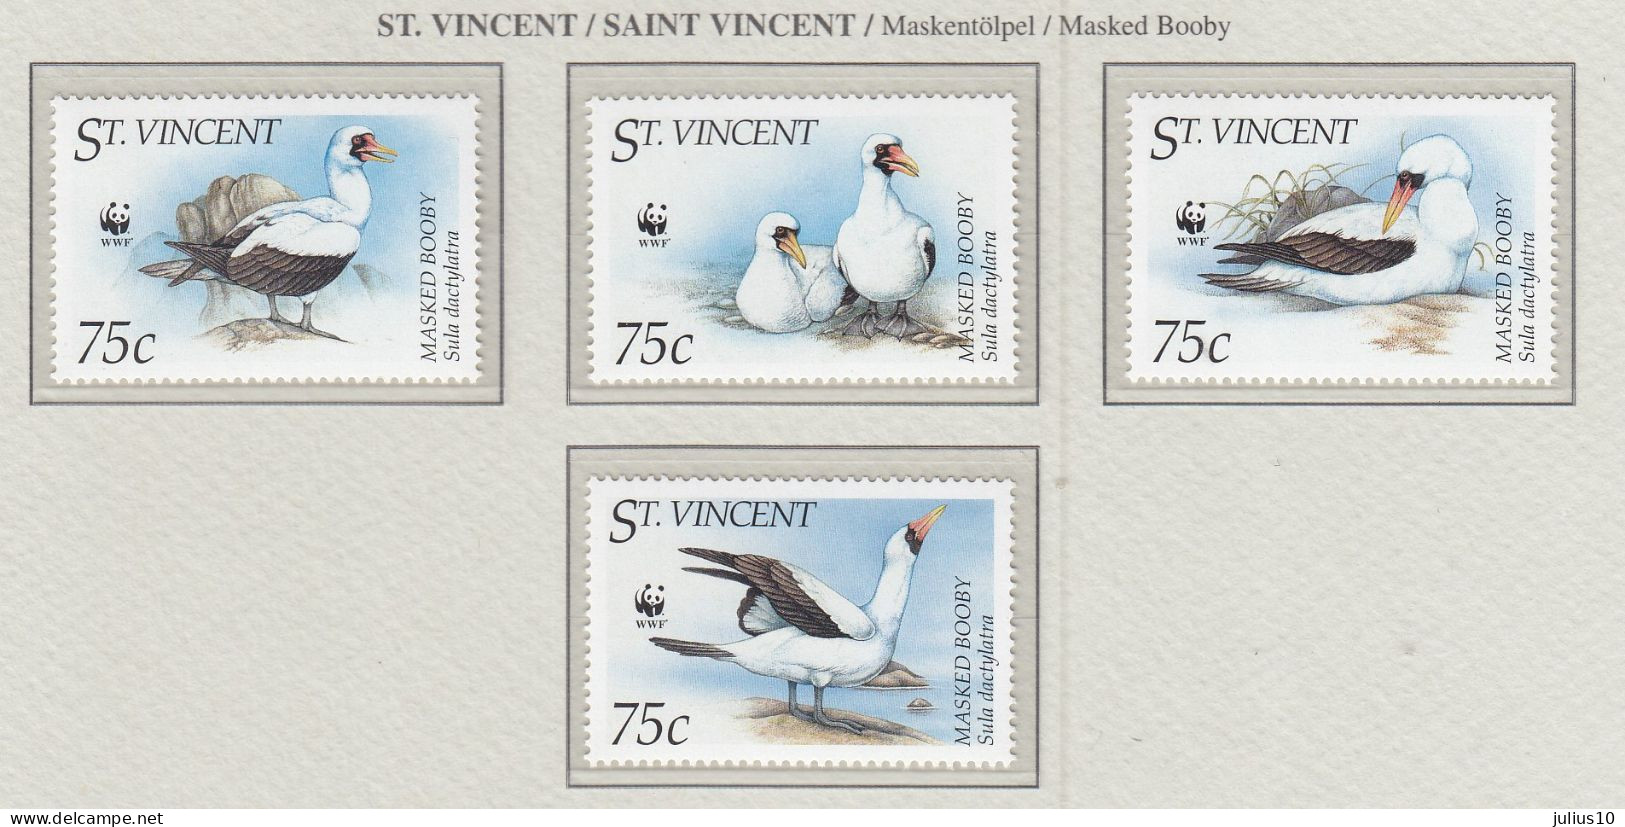 St. VINCENT 1995 WWF Masked Booby Birds Mi 3073 - 3076 MNH(**) Fauna 534 - Palmípedos Marinos